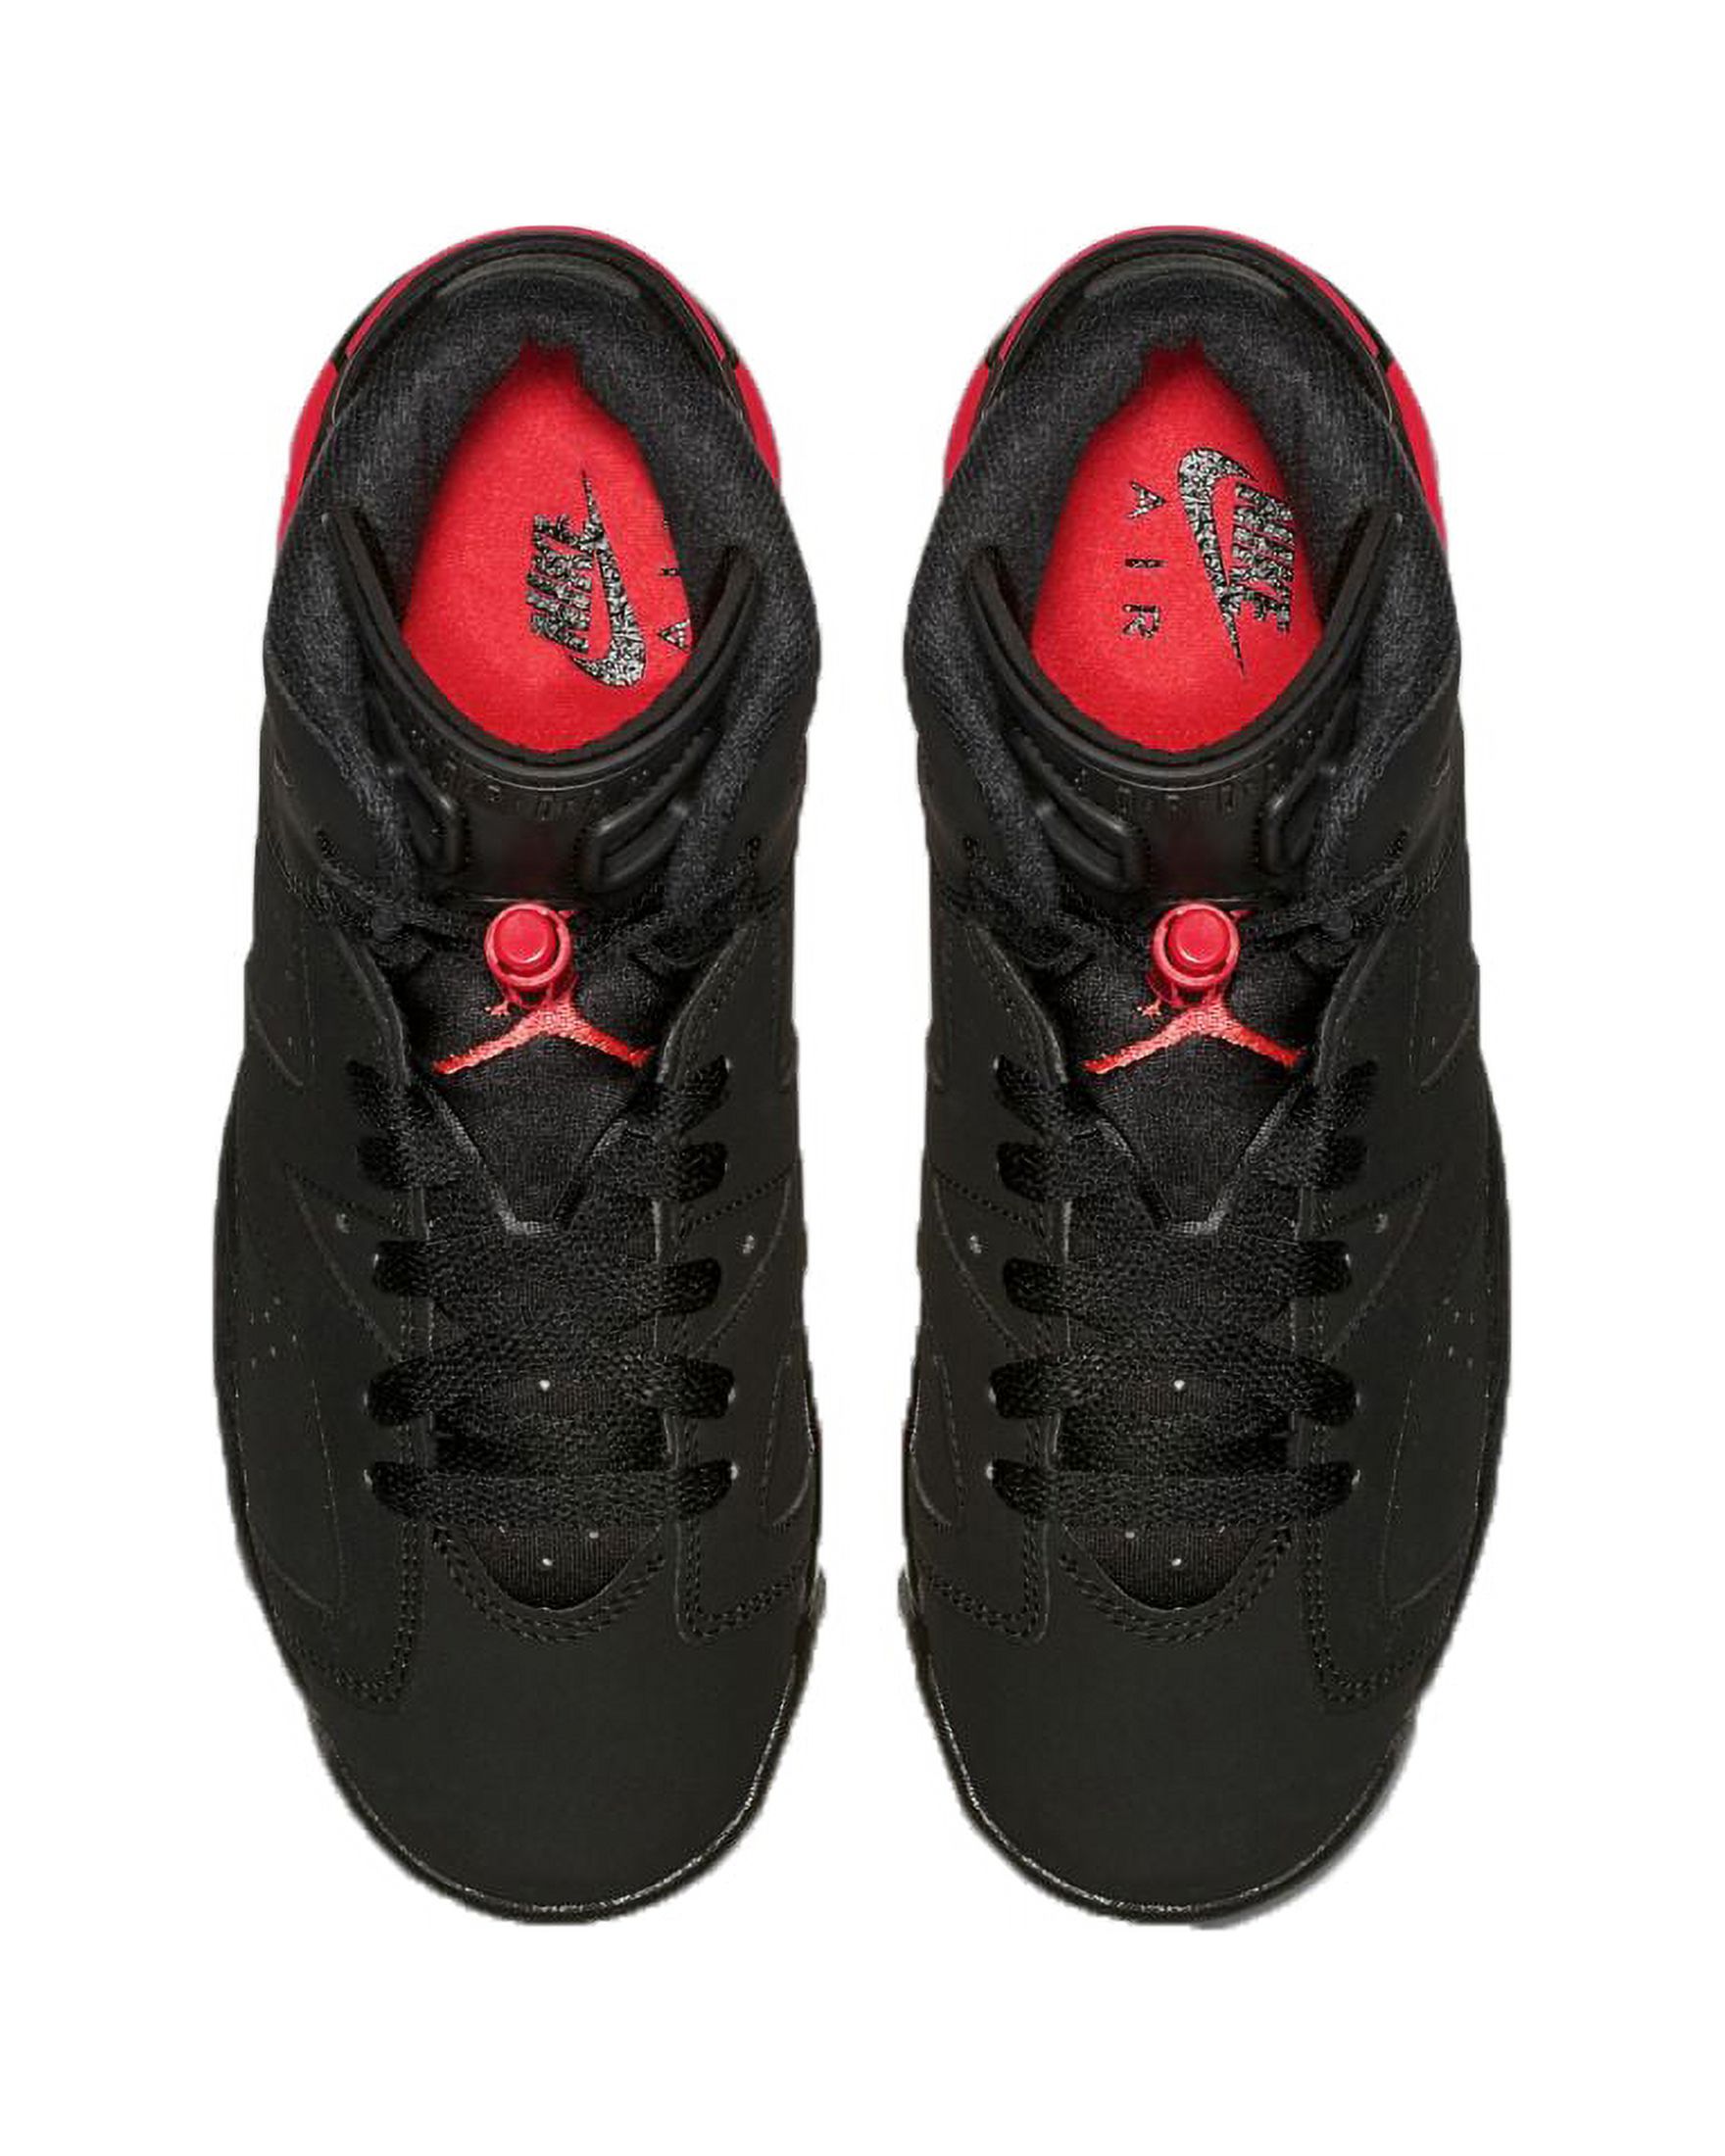 Nike Kids GS Air Jordan 6 Retro Basketball Shoe (6.5) - image 3 of 5